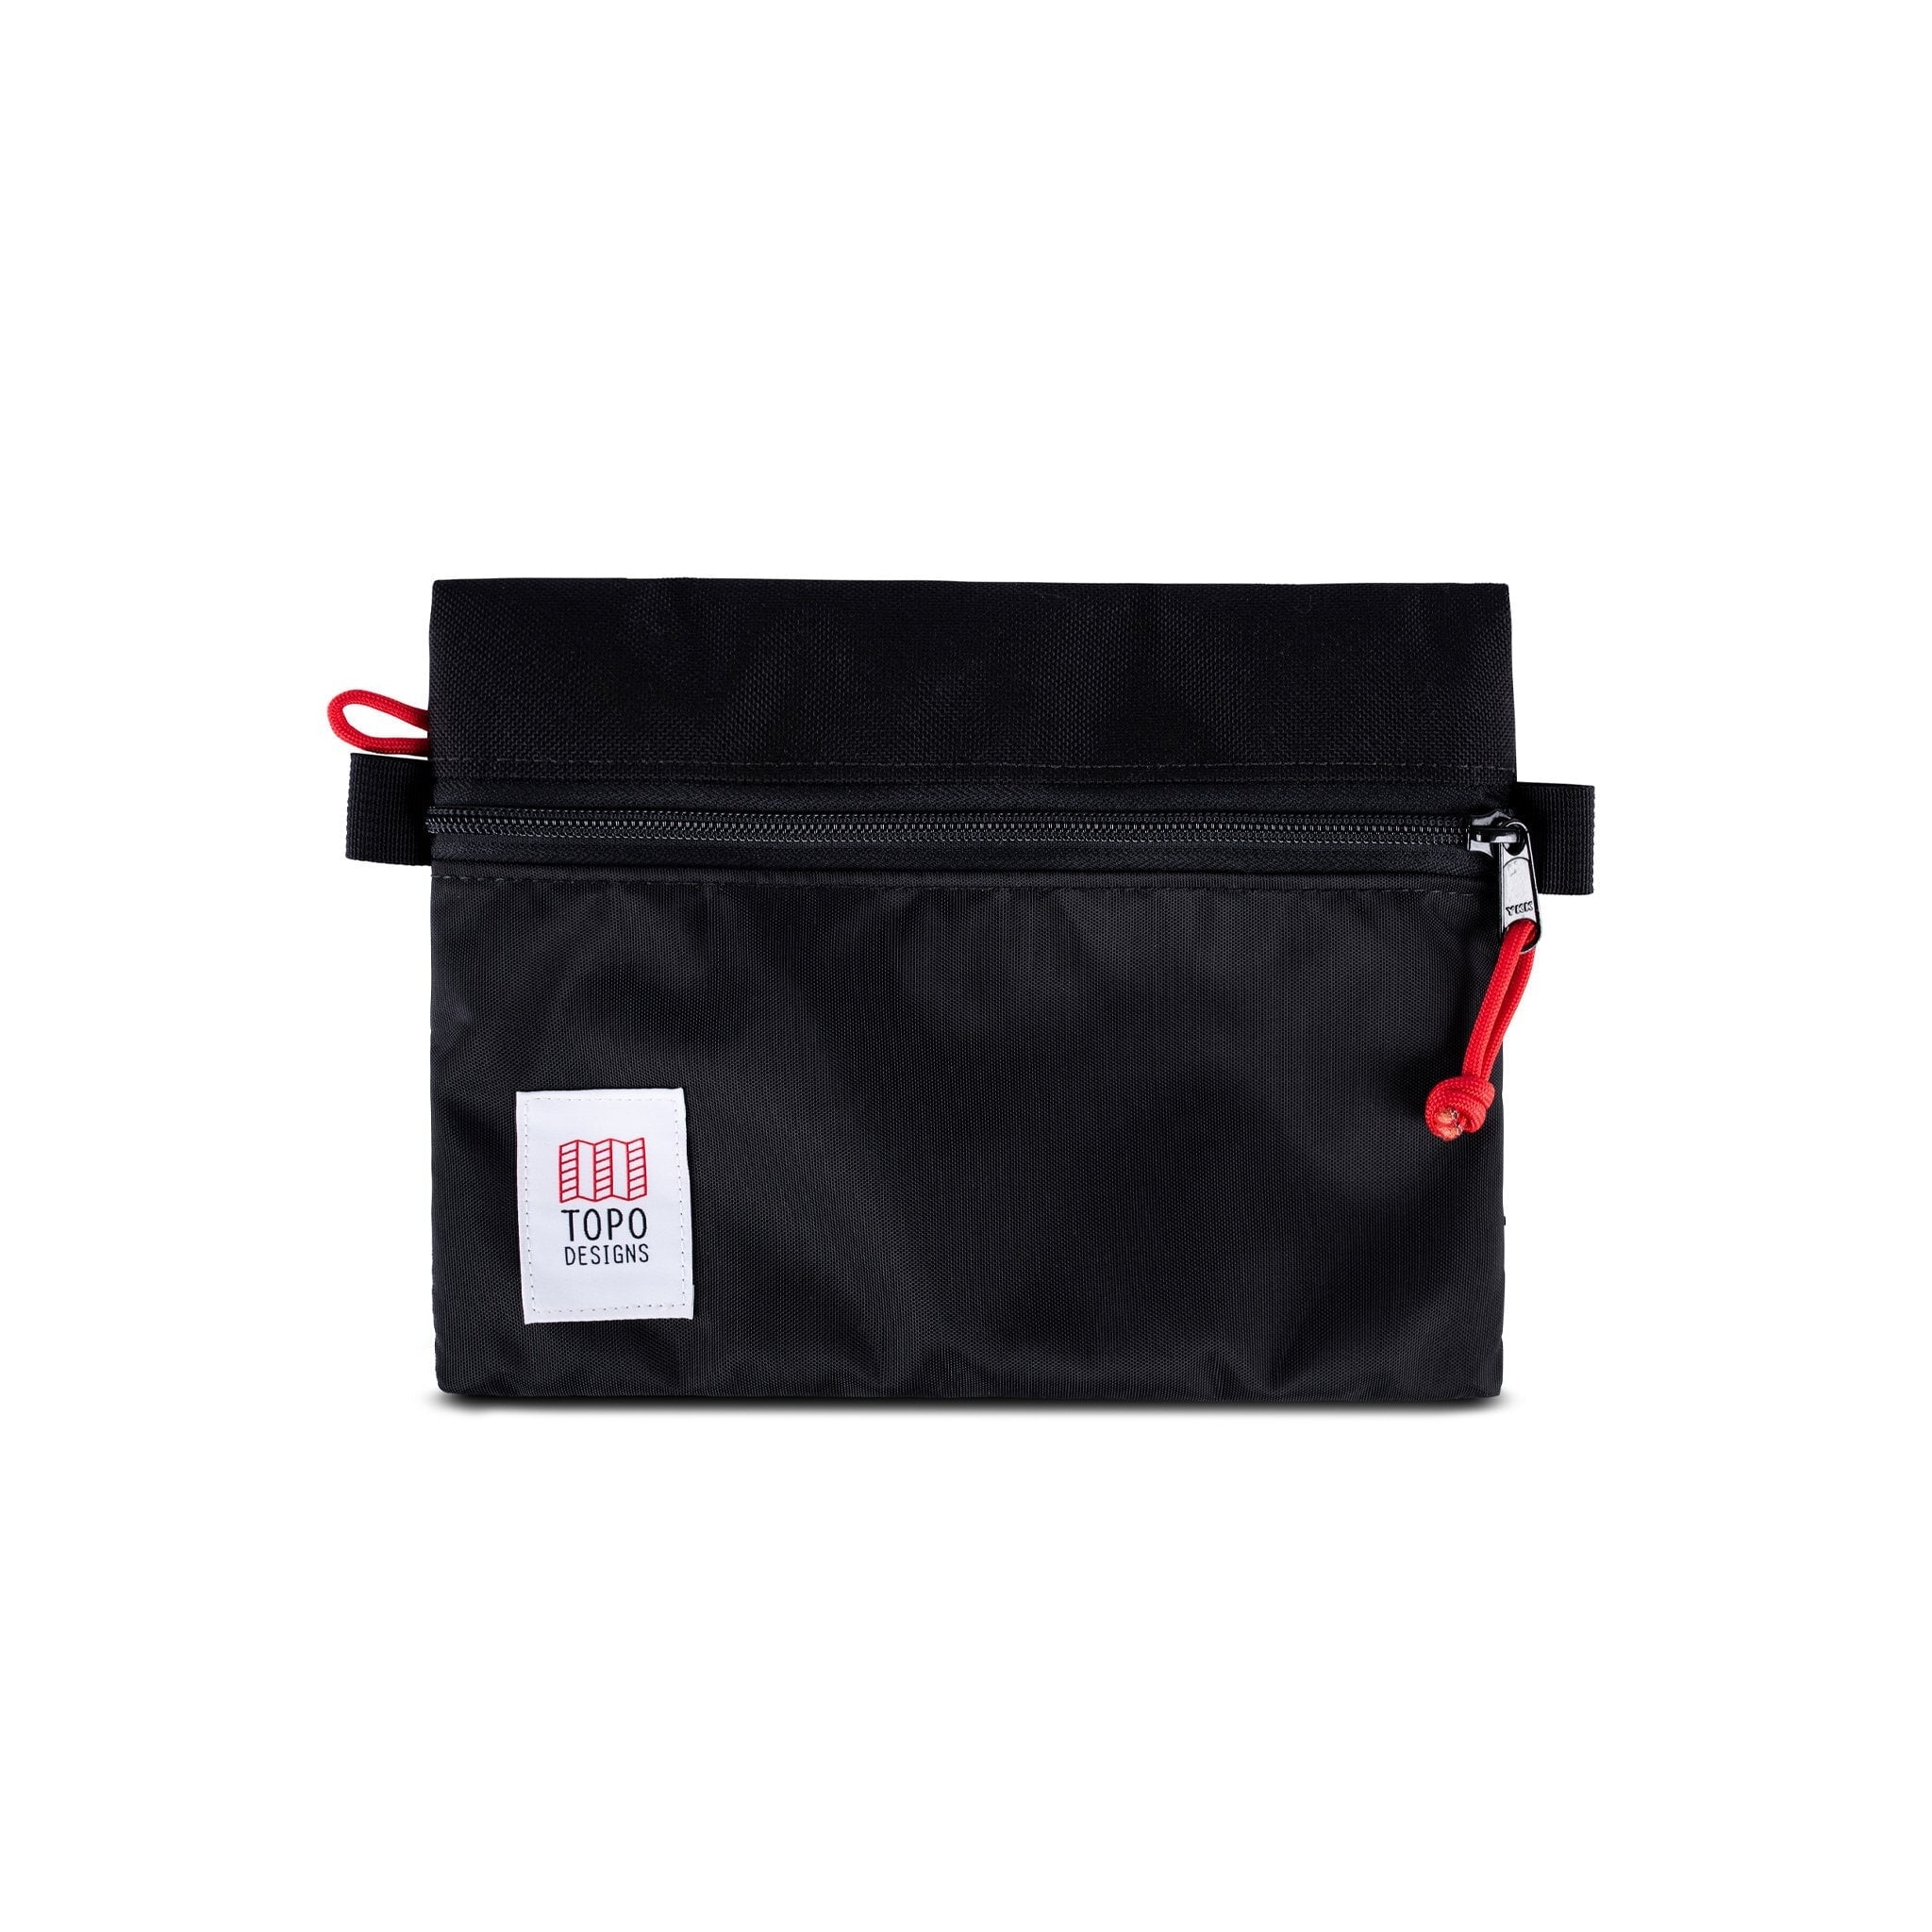 Topo Designs Accessory Medium Bag Kleintasche Topo Designs Black/Black 